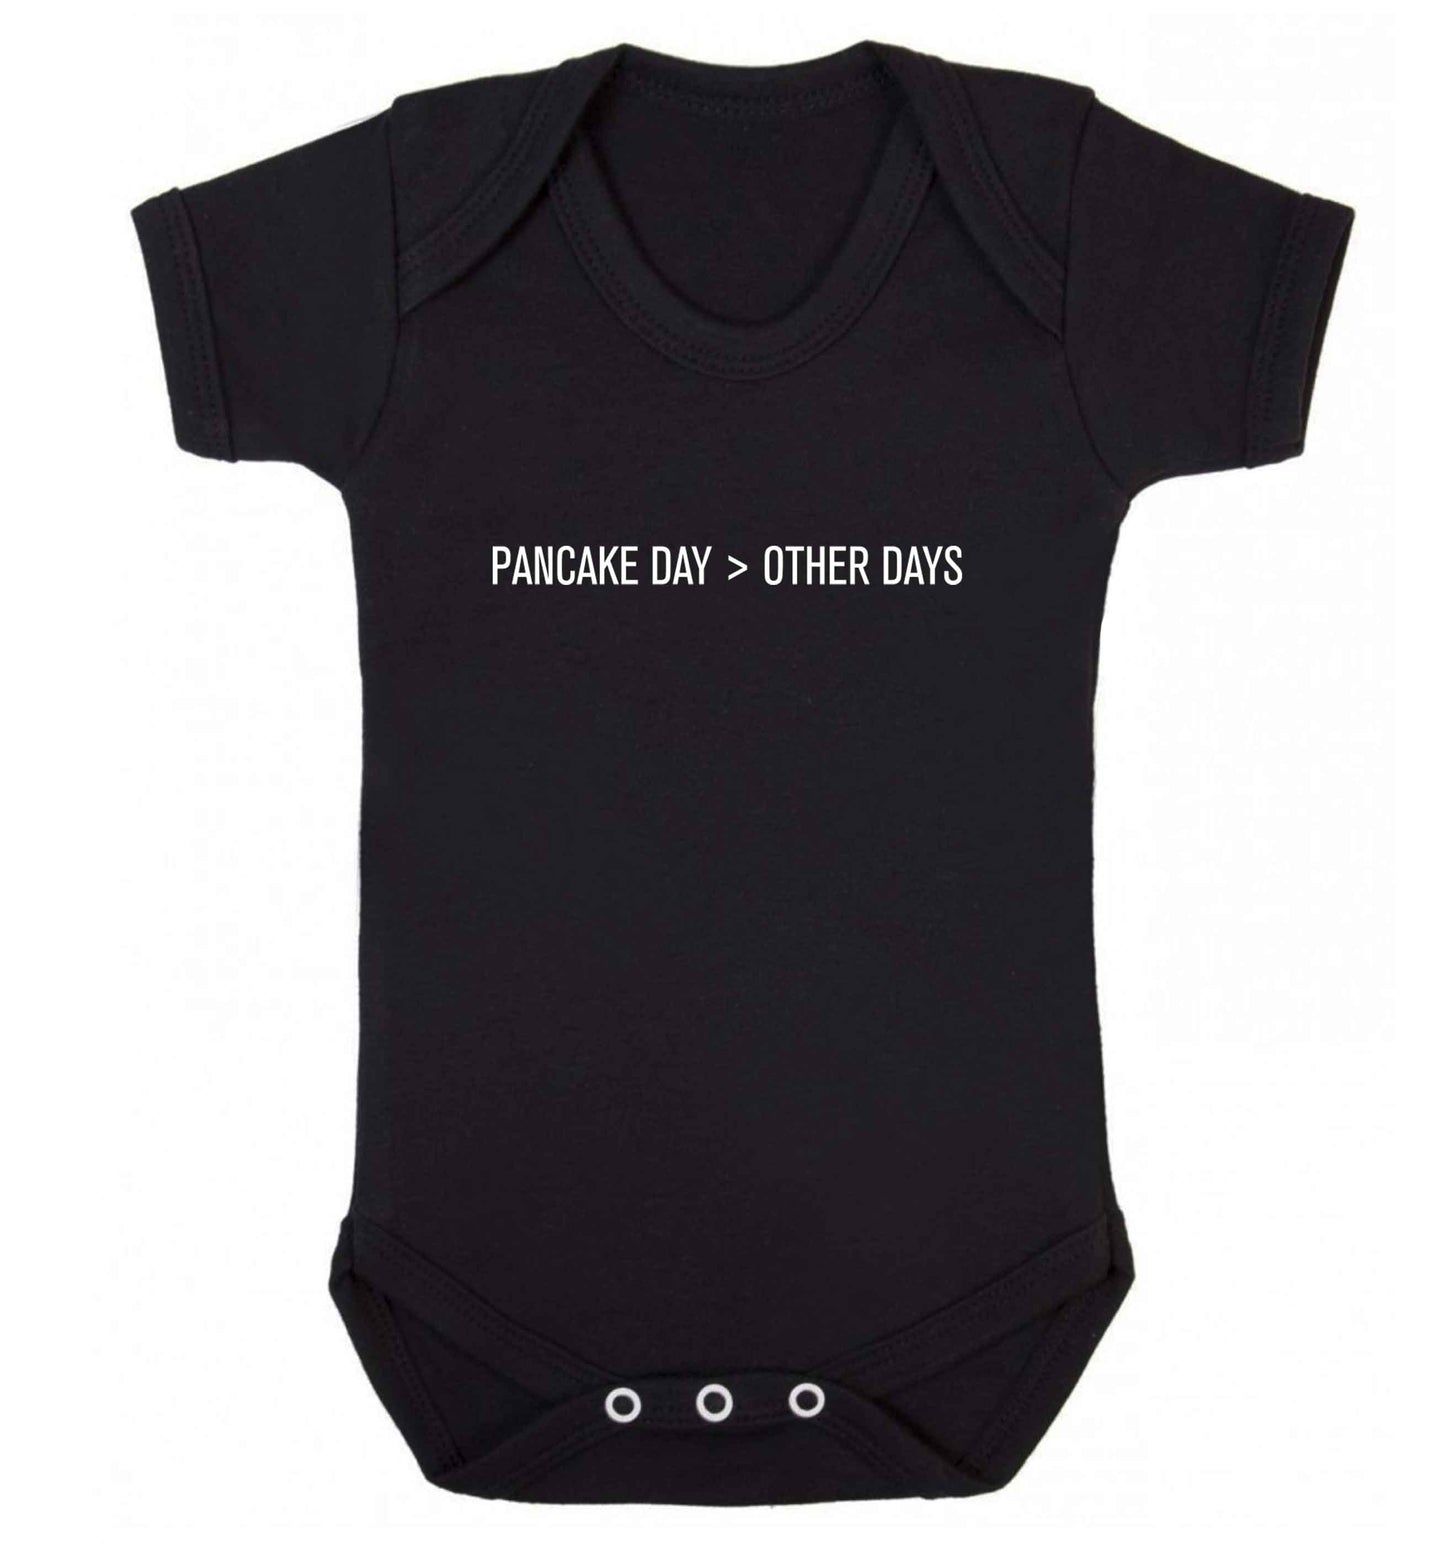 Pancake day > other days baby vest black 18-24 months